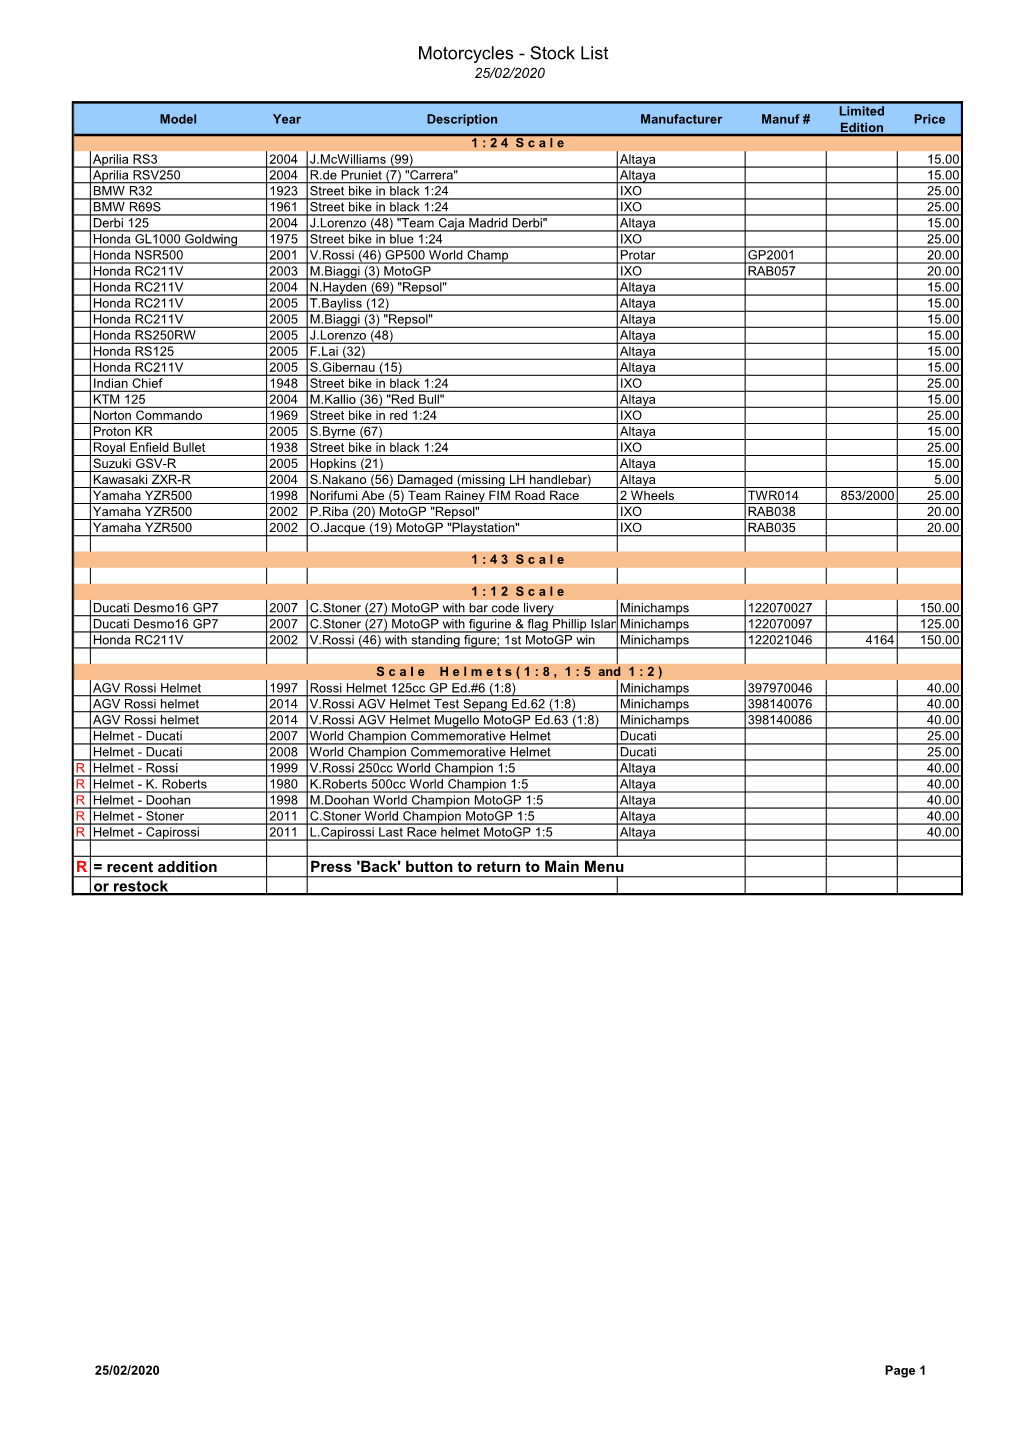 Motorcycles - Stock List 25/02/2020